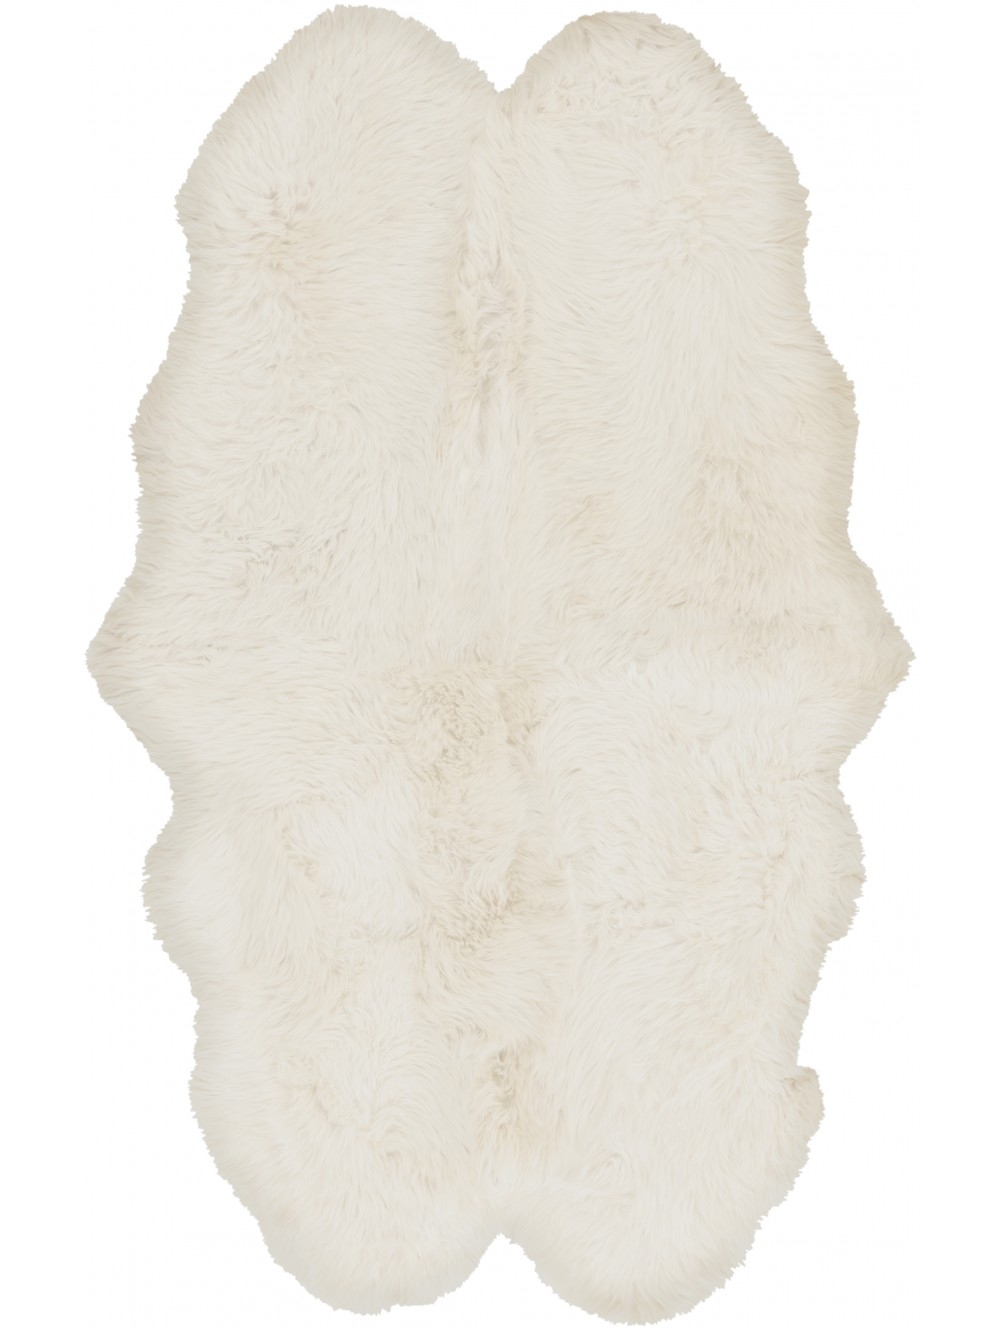 Alma Sheepskin Rug  - White - 4' x 6' - Image 2